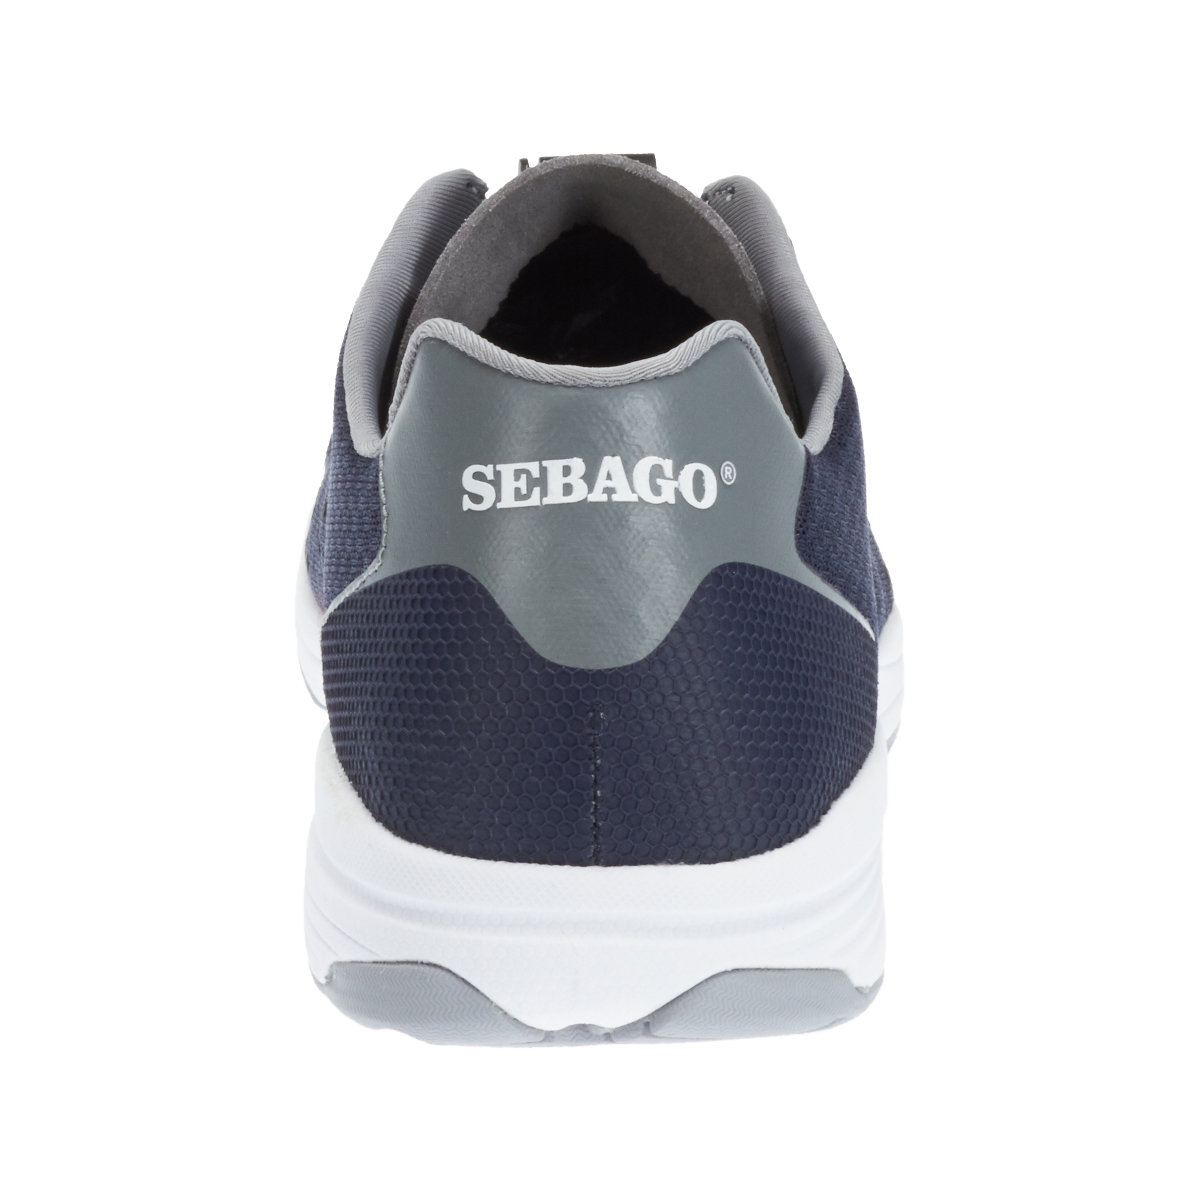 Sebago Cyphon Sea Sport chaussures à voile homme navy, taille EU 43,5 (US 9,5)